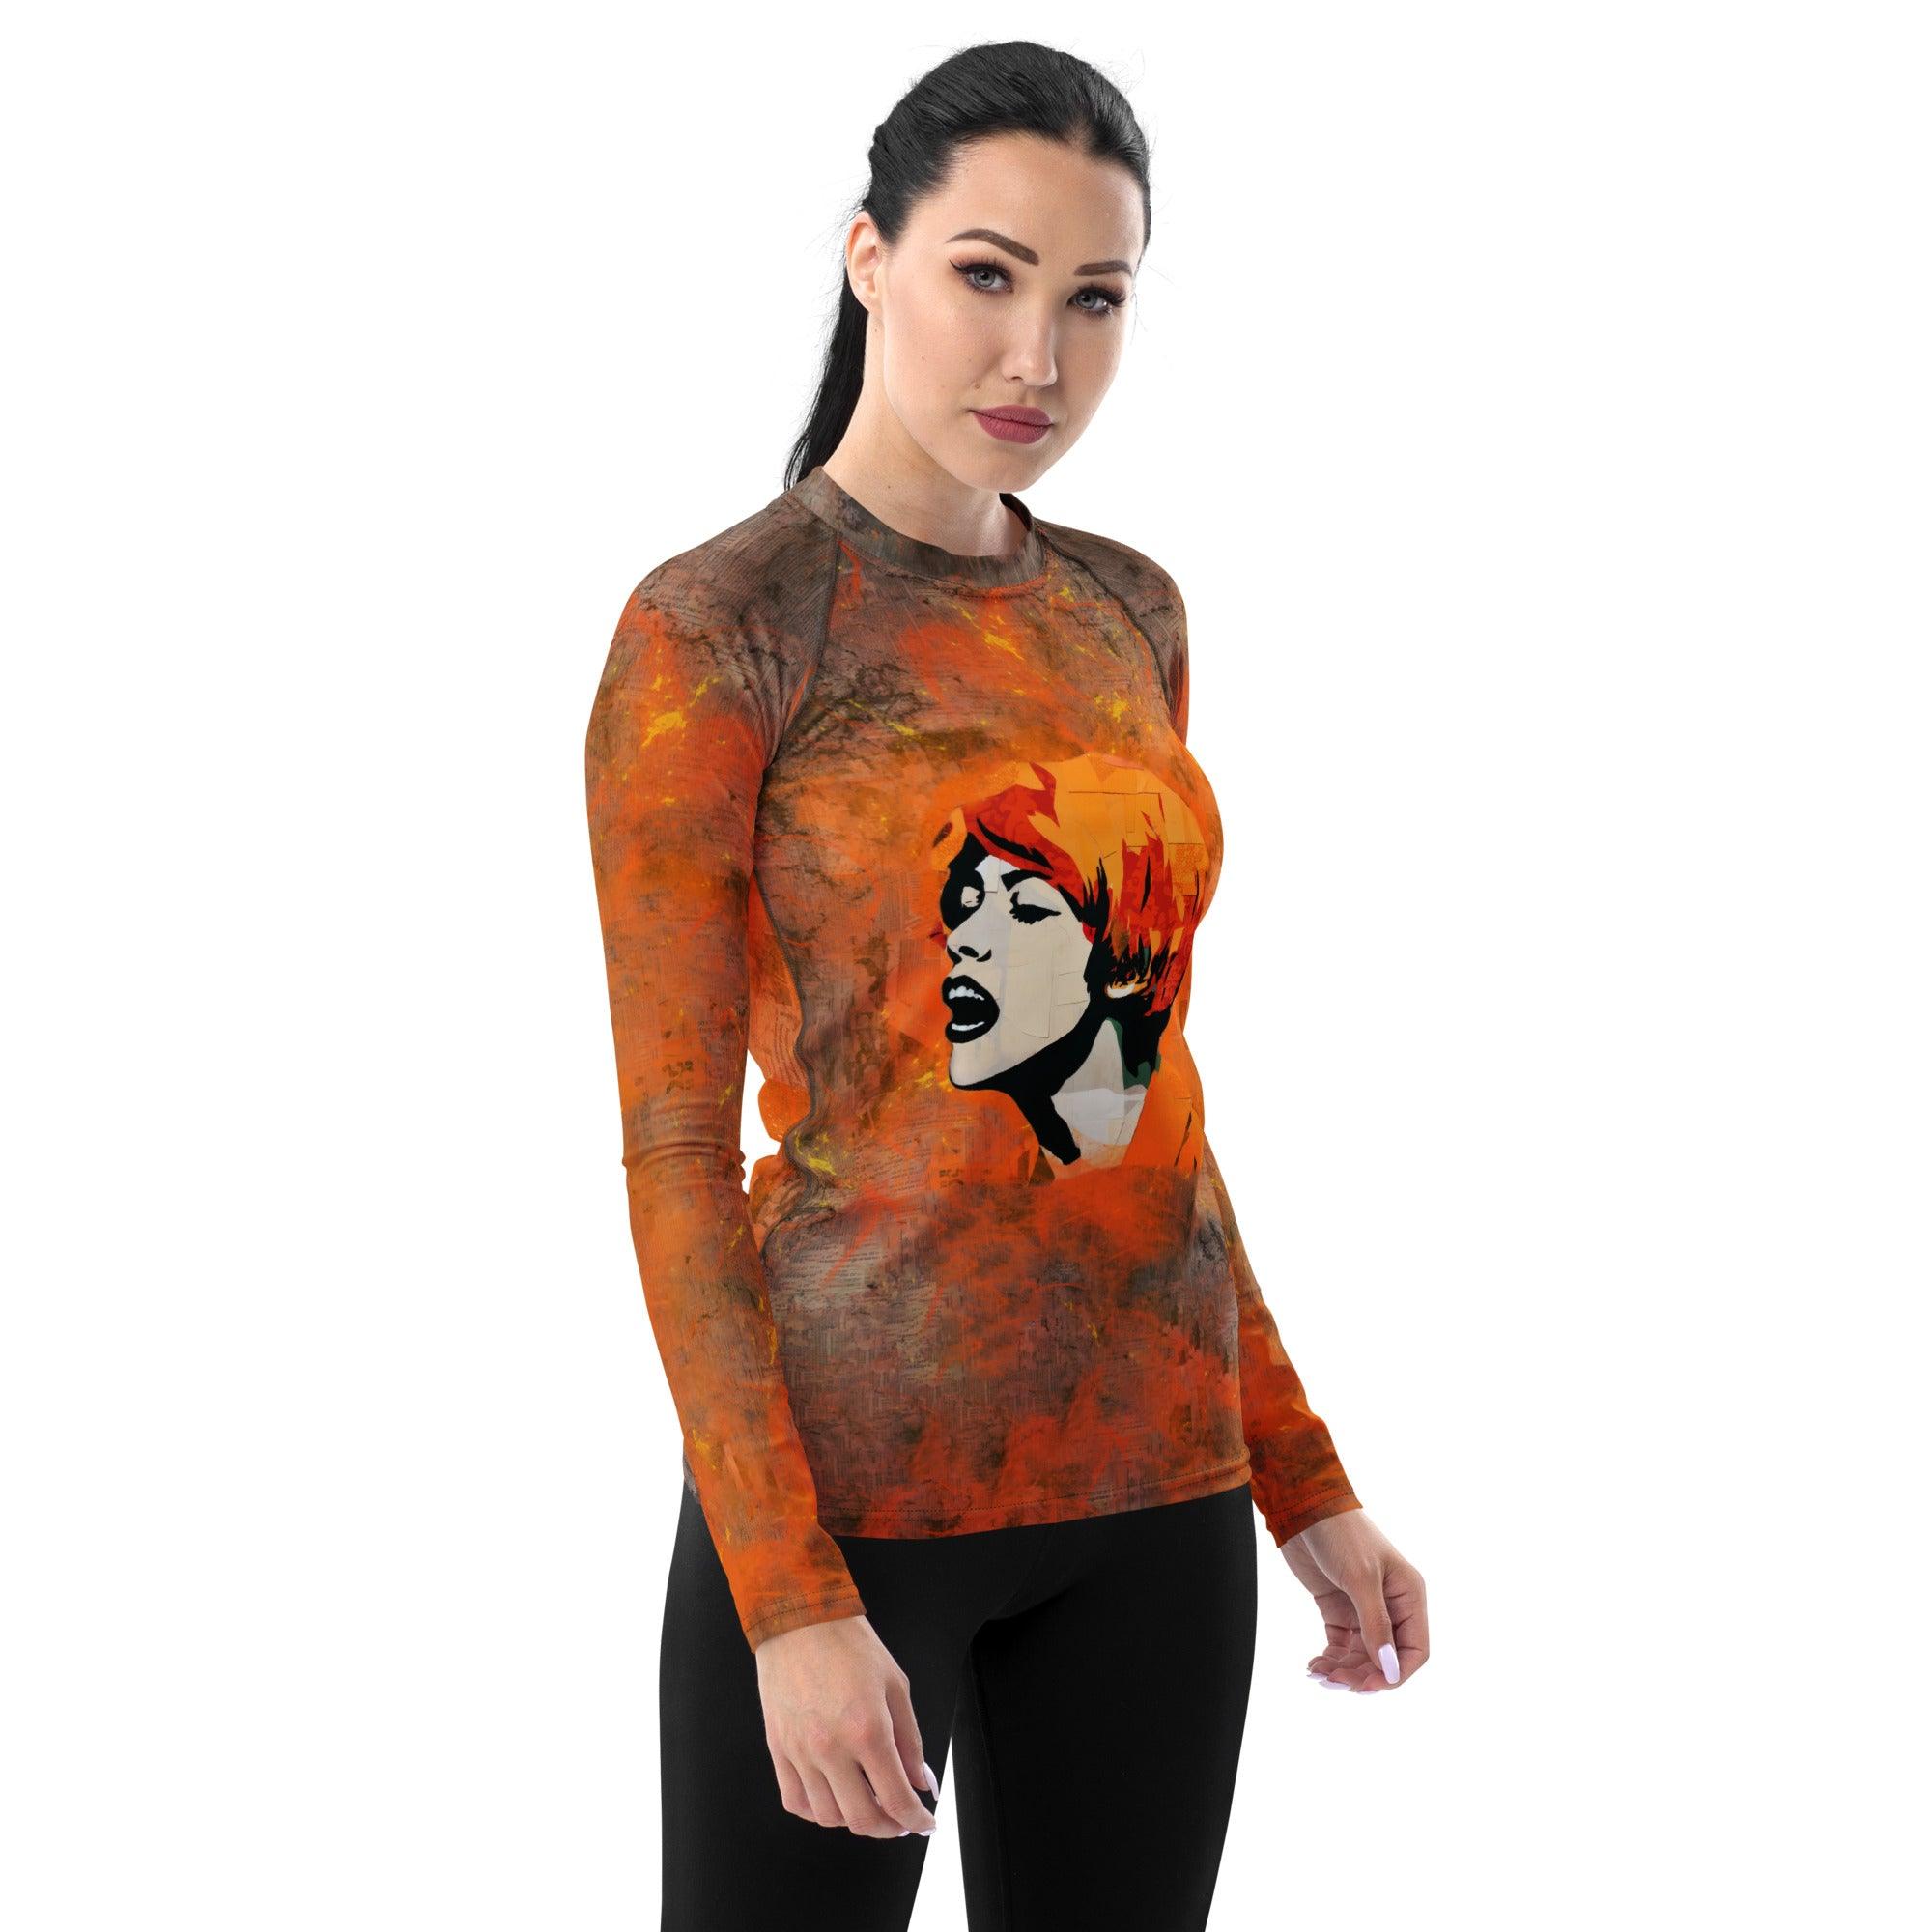 Rock 'n' Roll Icons Women's All-Over Print Rash Guards - Beyond T-shirts